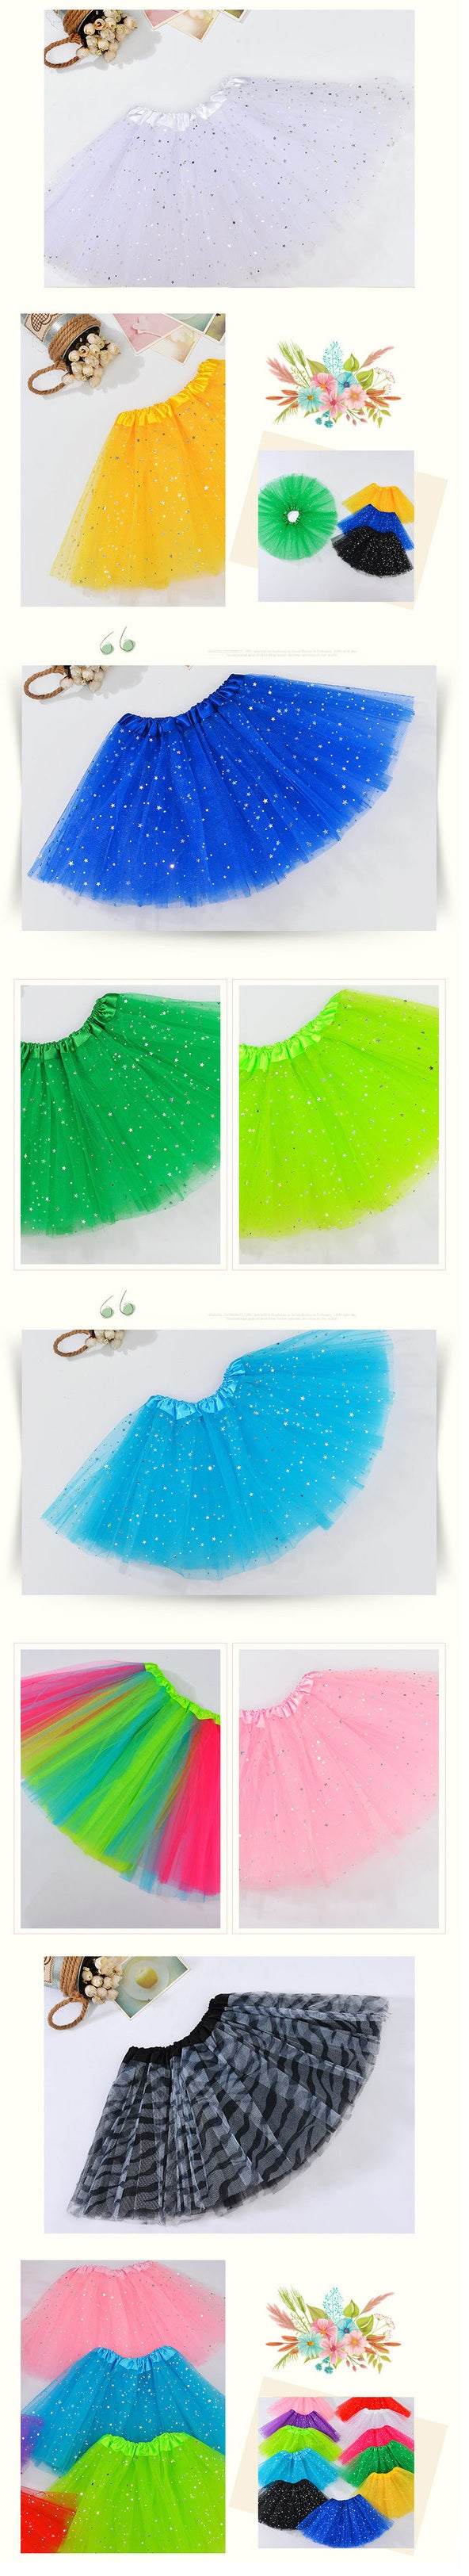 Sequin Tulle Tutu Skirt Ballet Kids Princess Dressup Party Baby Girls Dance Wear, Royal Blue, Kids